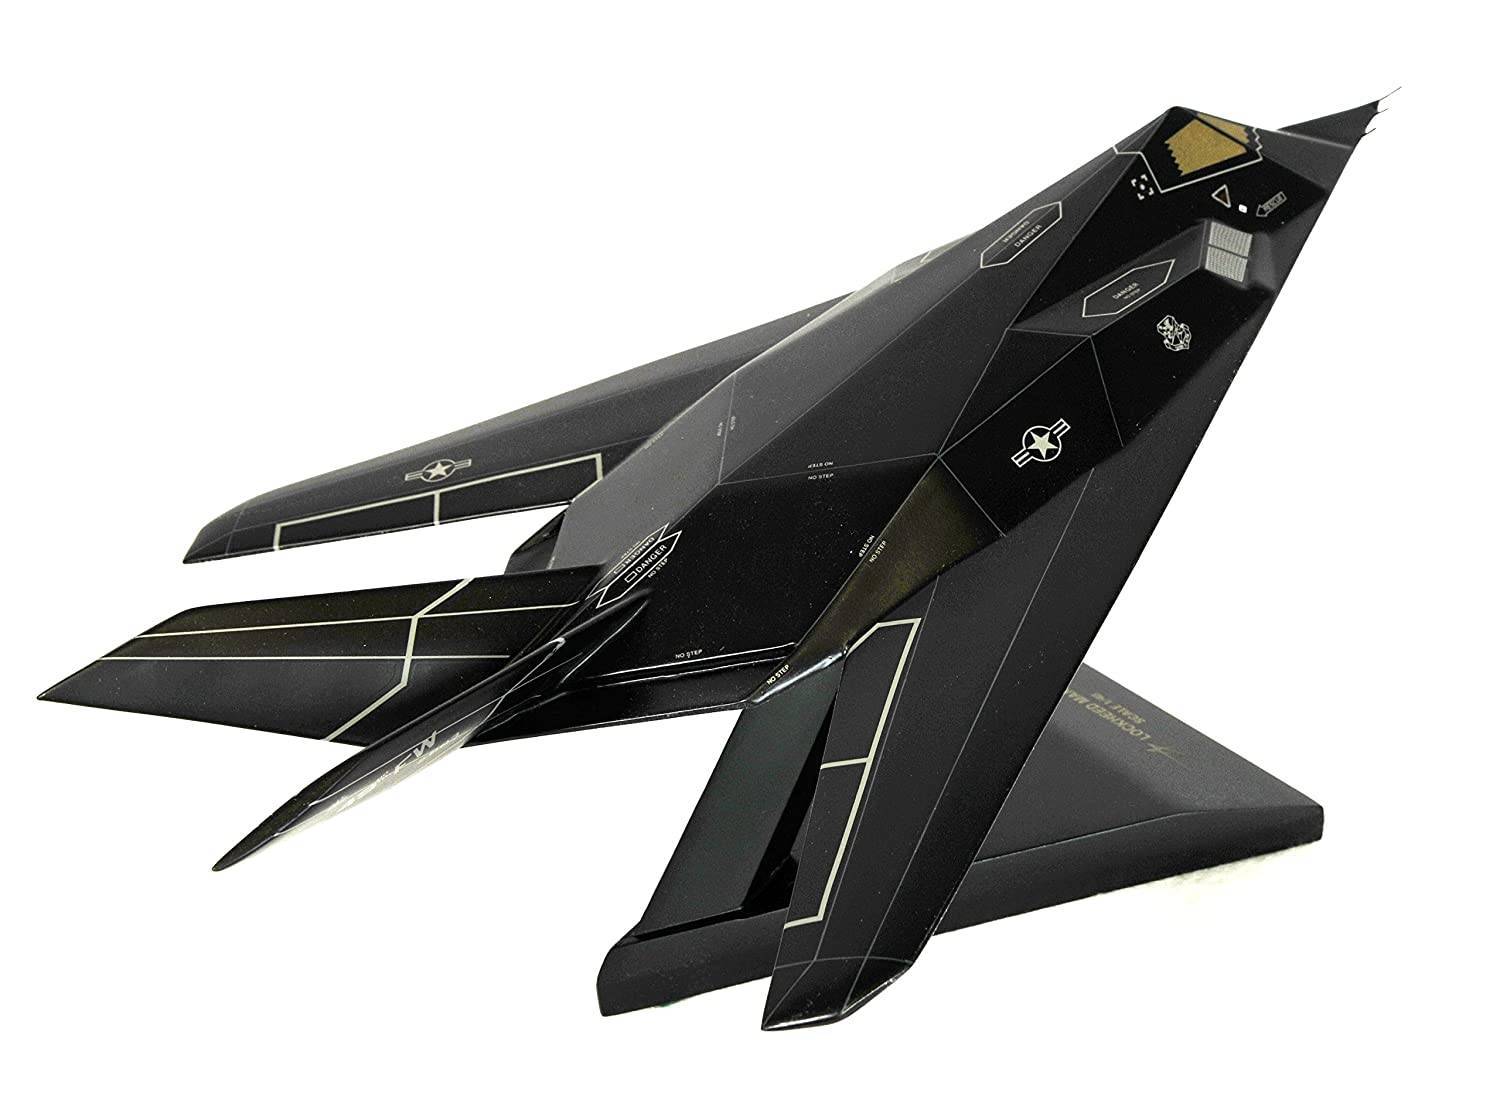 Lockheed f-117 nighthawk — википедия переиздание // wiki 2